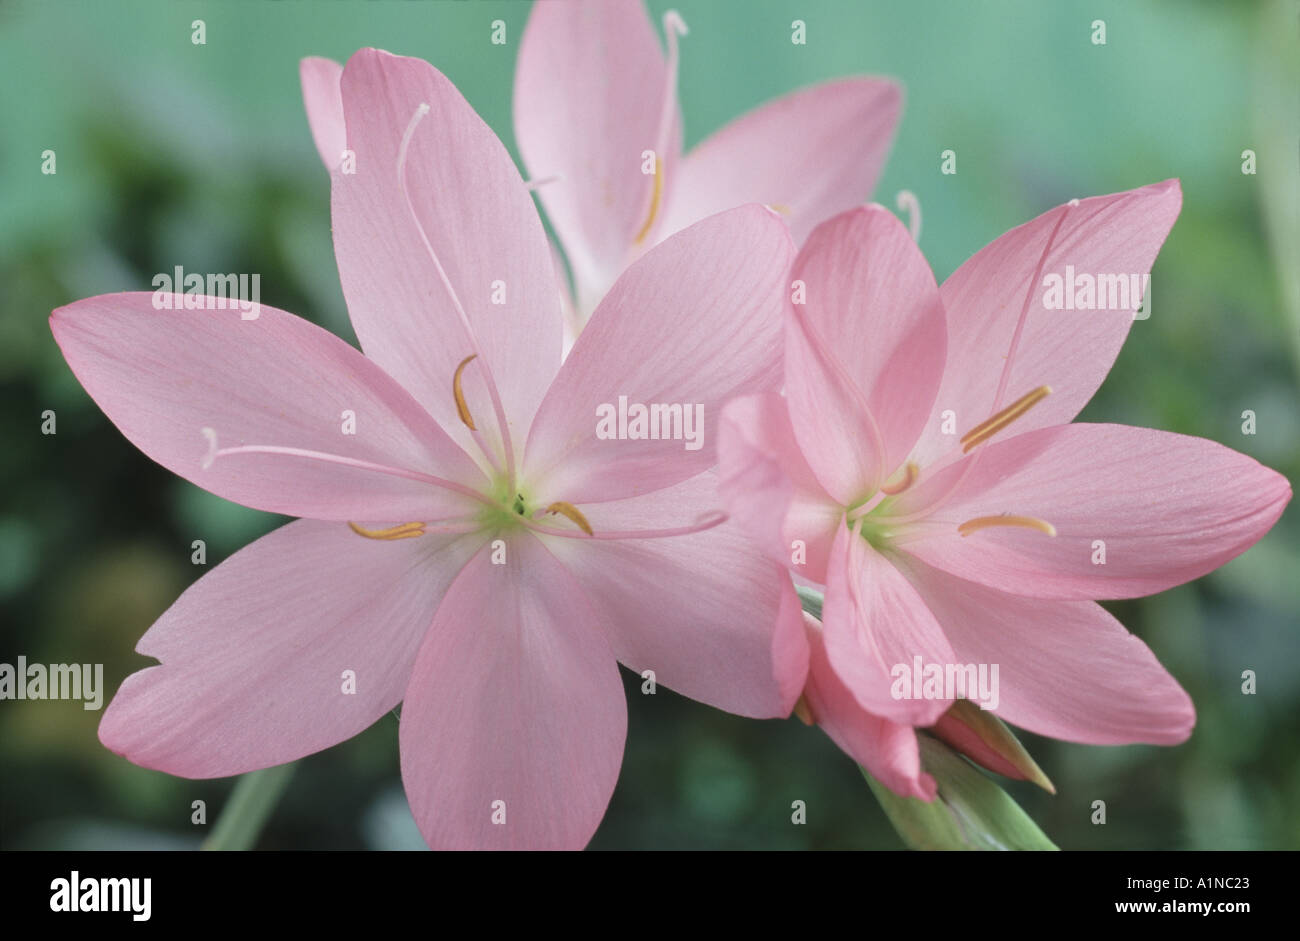 Hesperantha coccinea syn. Schizostylis coccinea 'Jennifer'. AGM Kaffir lily. Stock Photo